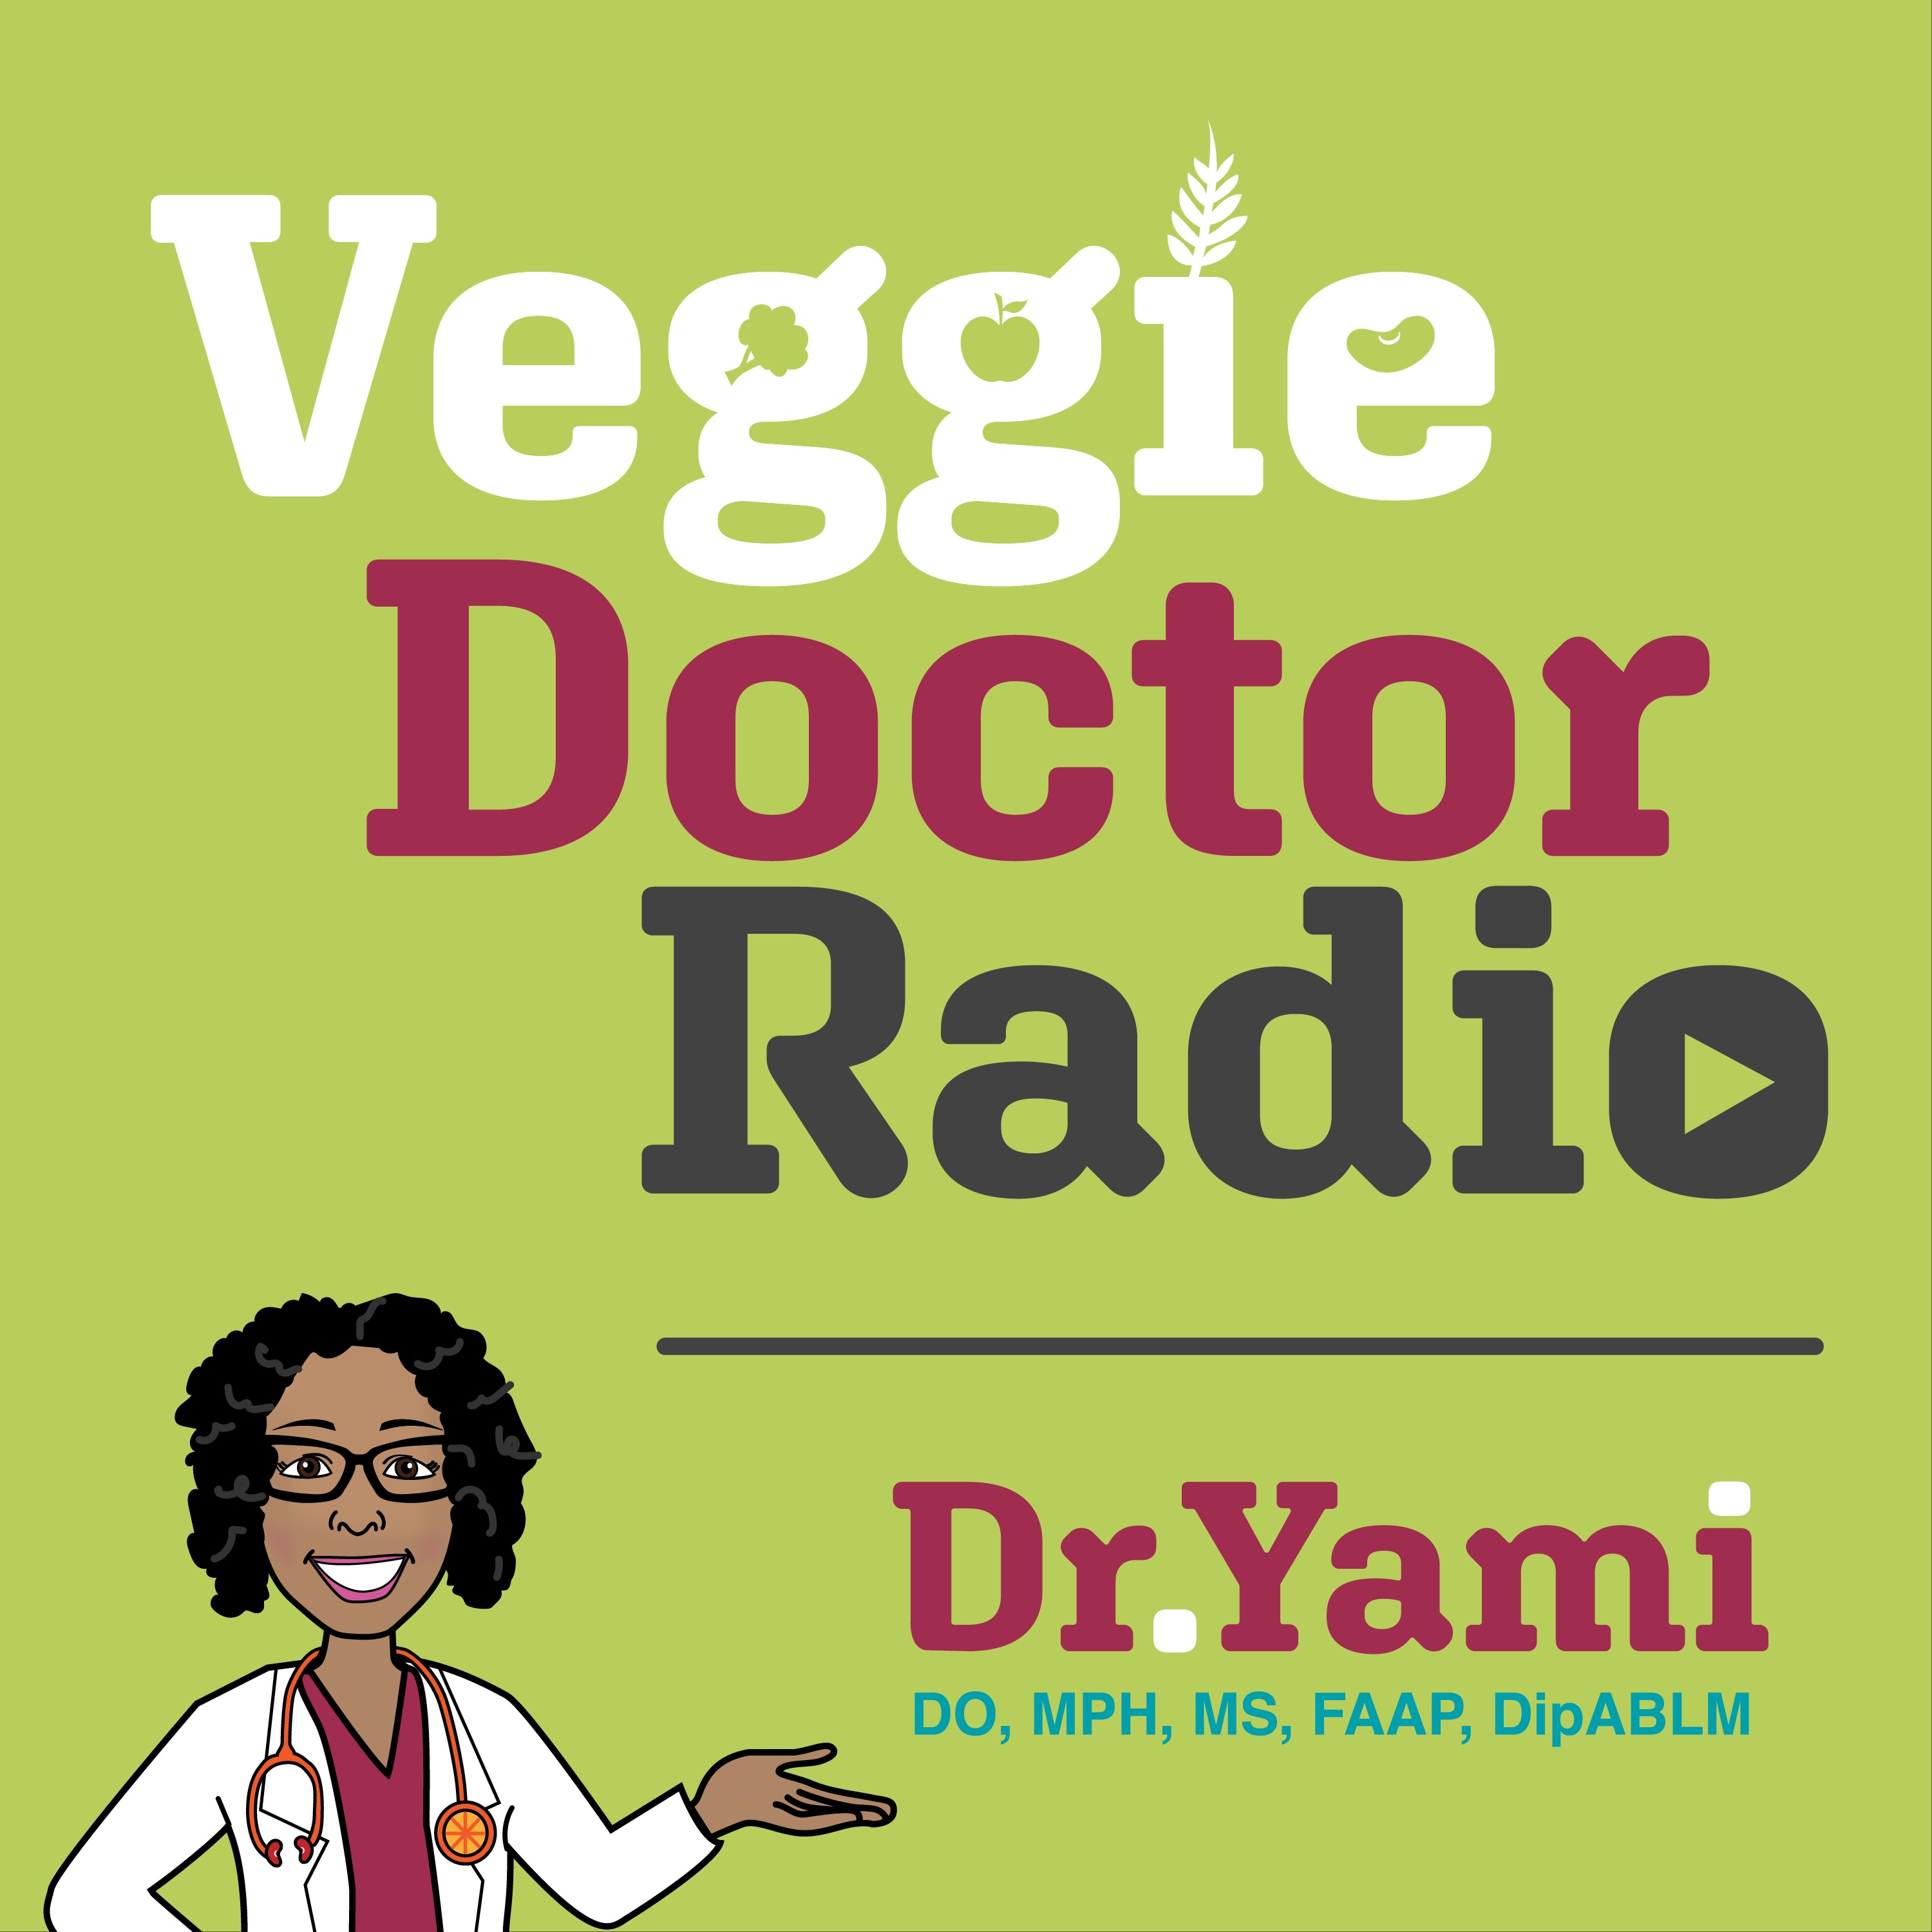 200: Weight Stigma is Deadly (Veggie Doctor Radio)